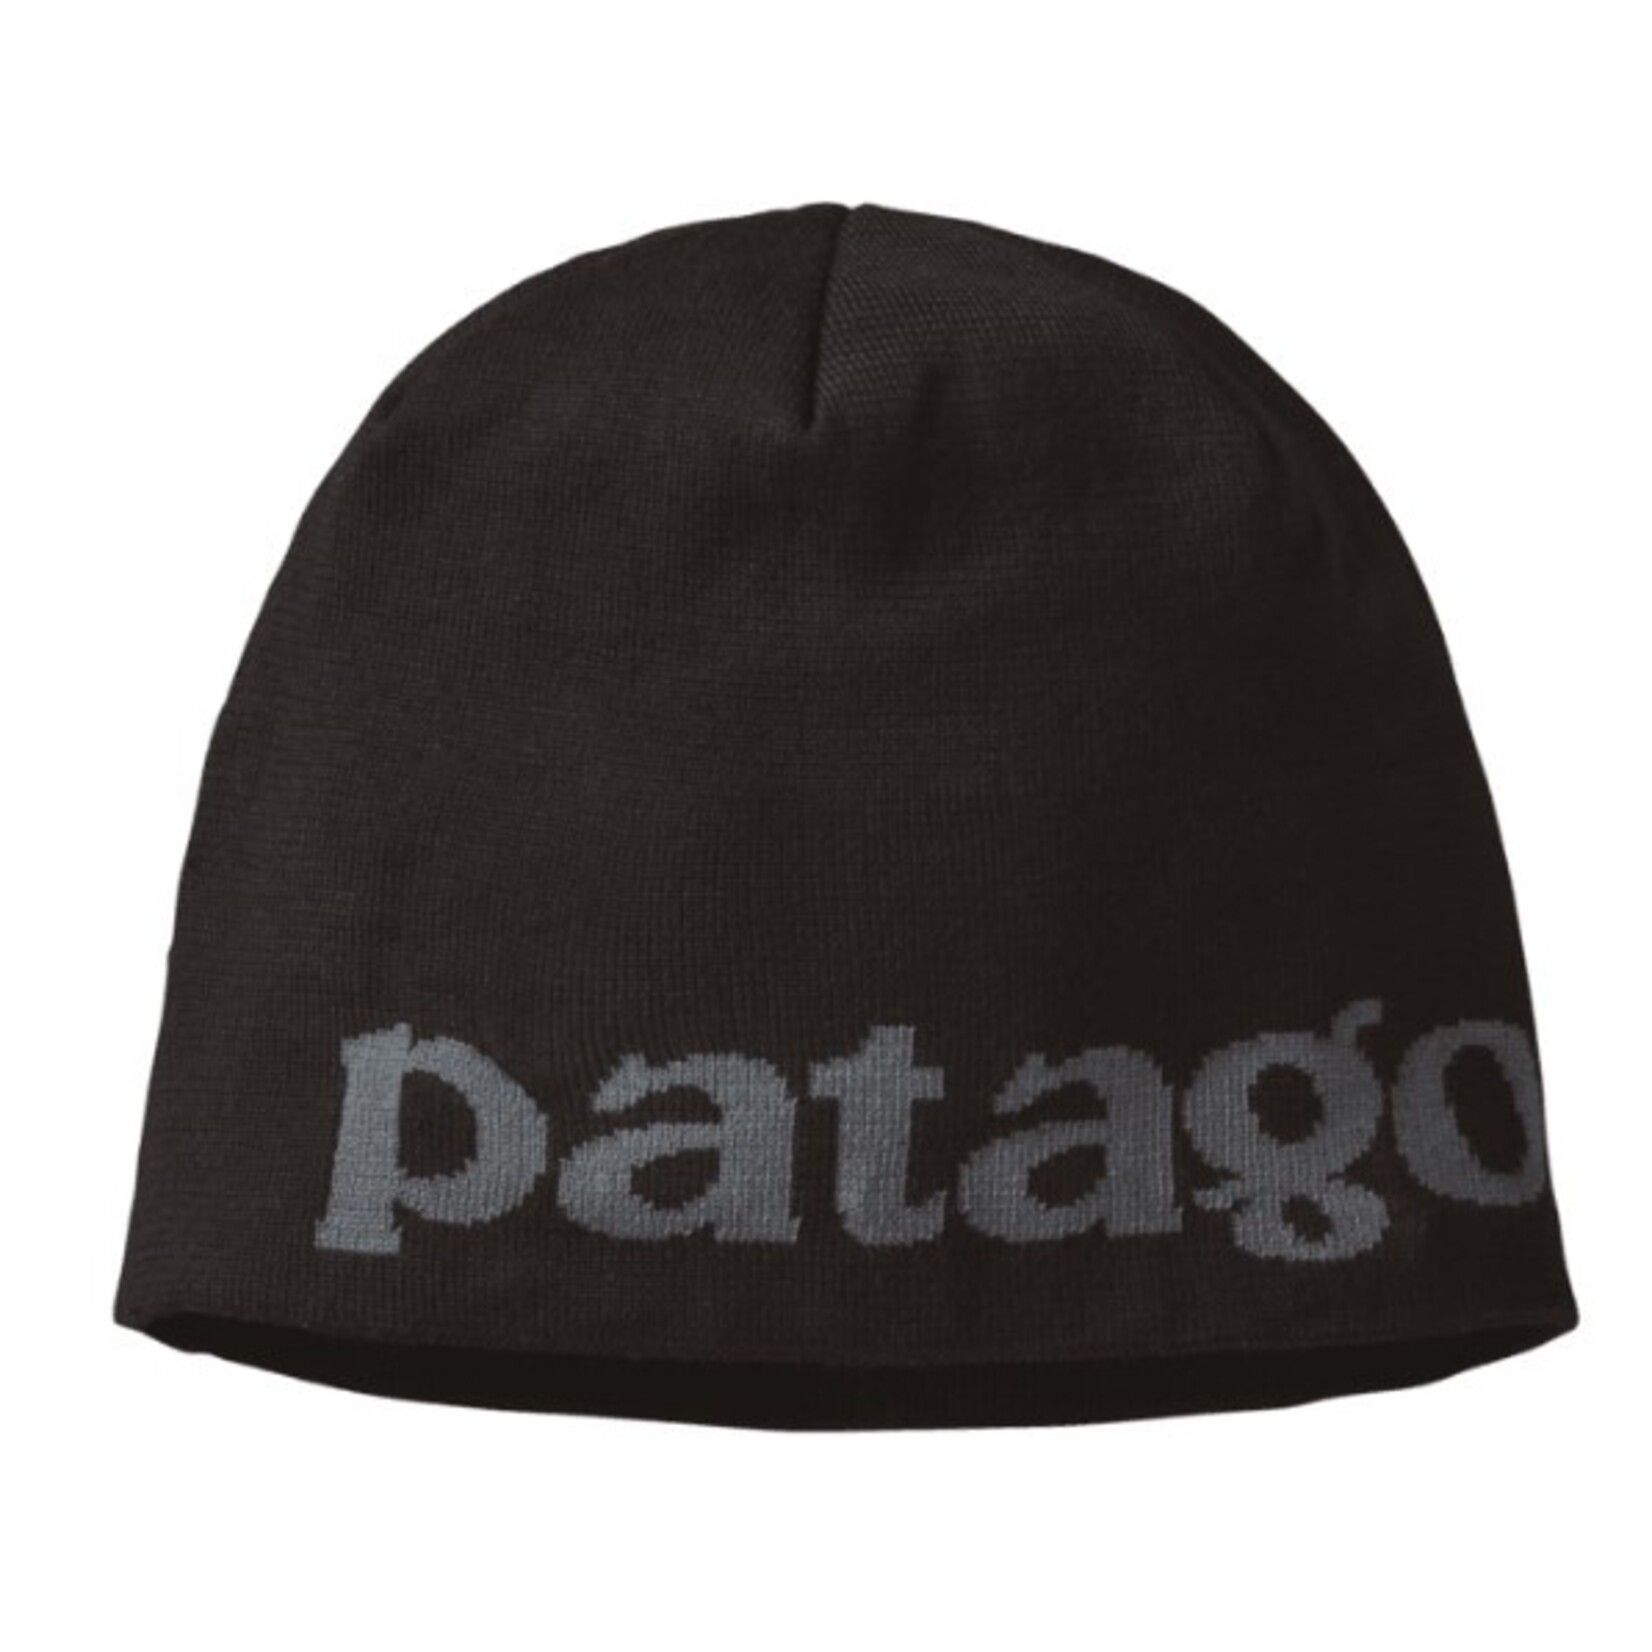 PATAGONIA Beanie Hat